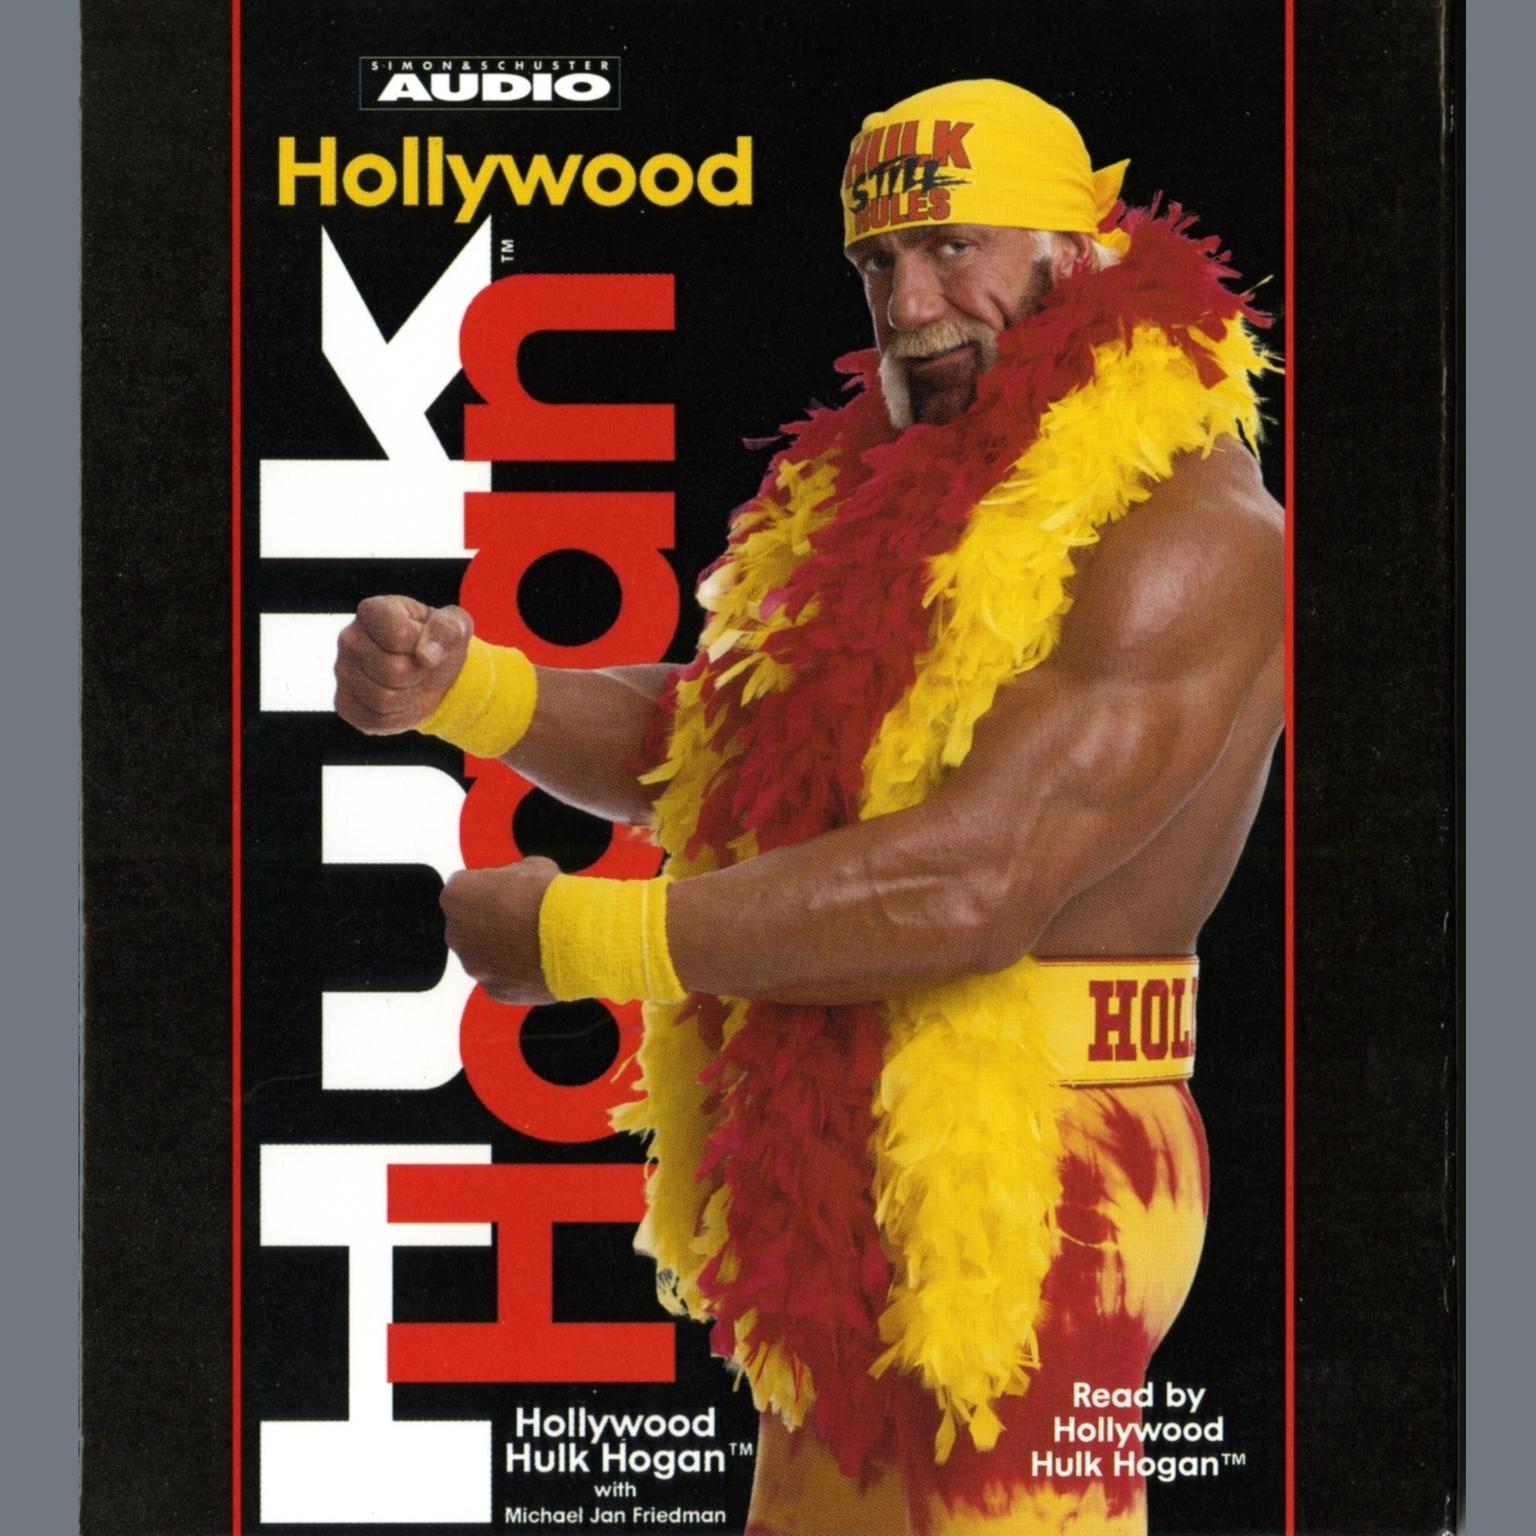 Hollywood Hulk Hogan (Abridged) Audiobook, by Michael Jan Friedman